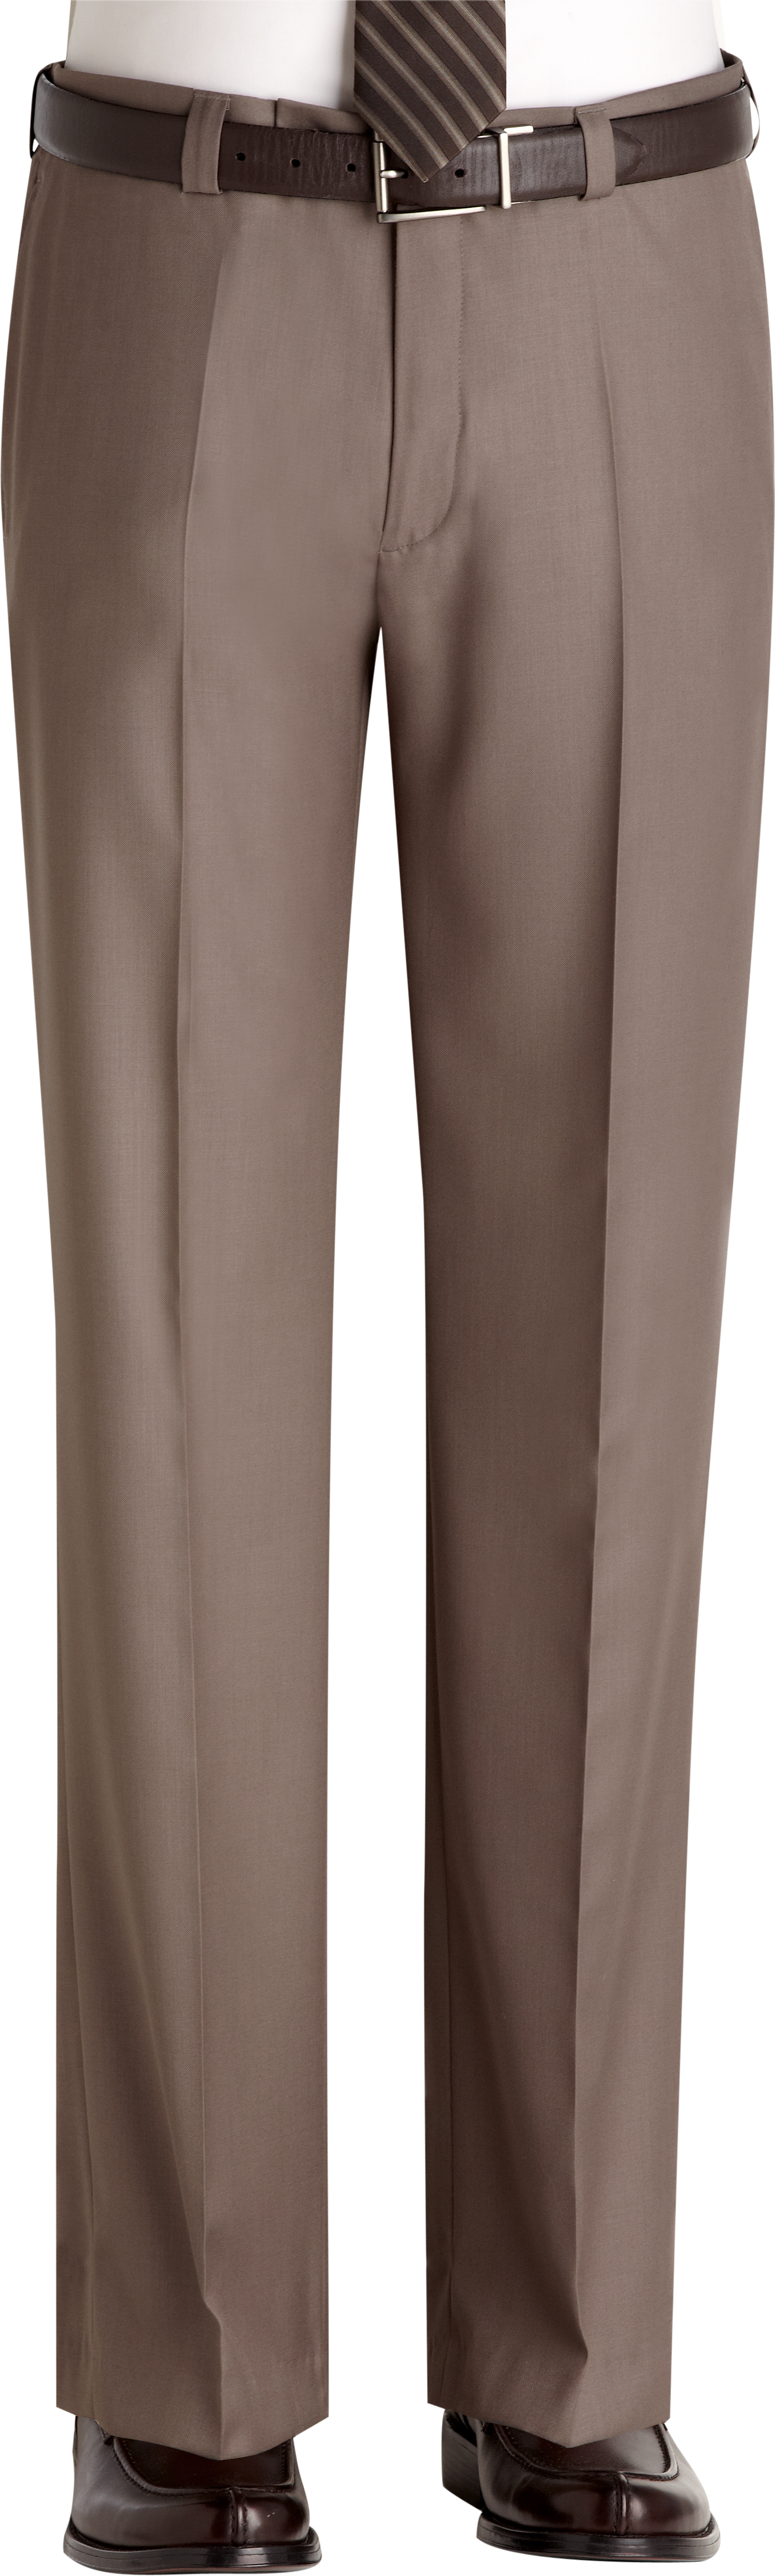 Pronto Uomo Taupe Slim Fit Dress Pants - Men's Sale | Men's Wearhouse